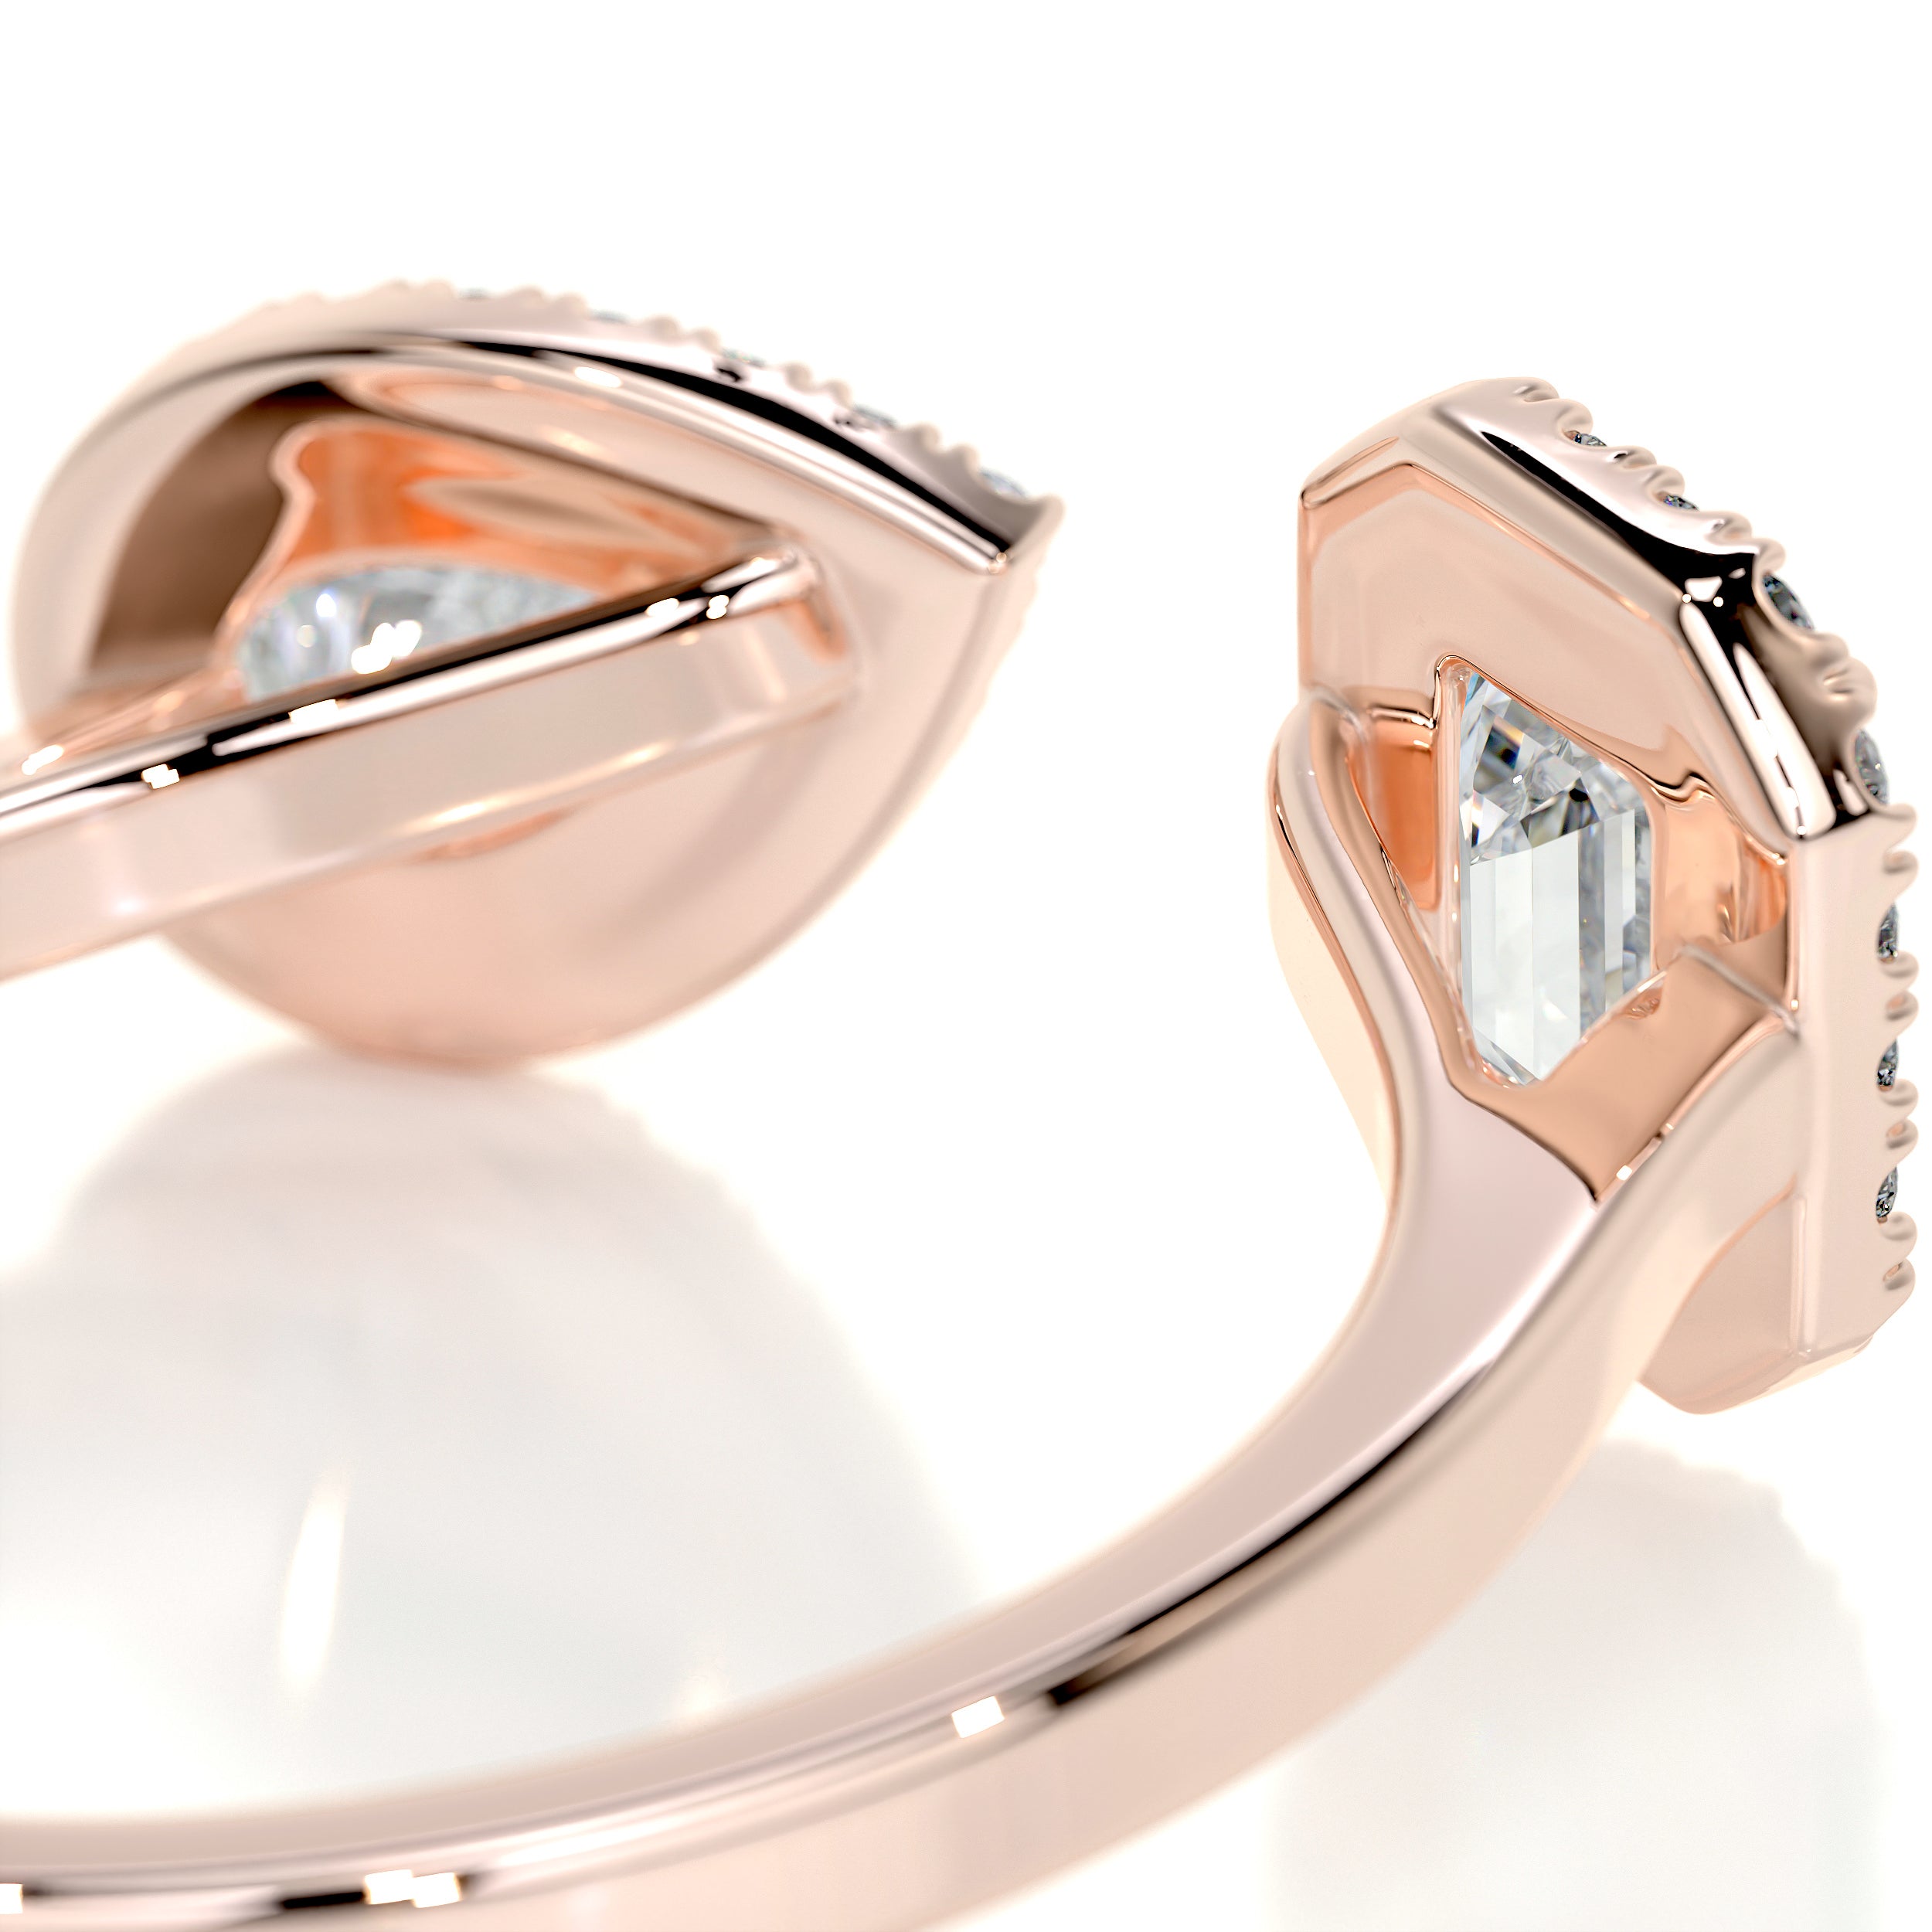 Edith Designer Diamond Ring   (1.2 Carat) -14K Rose Gold